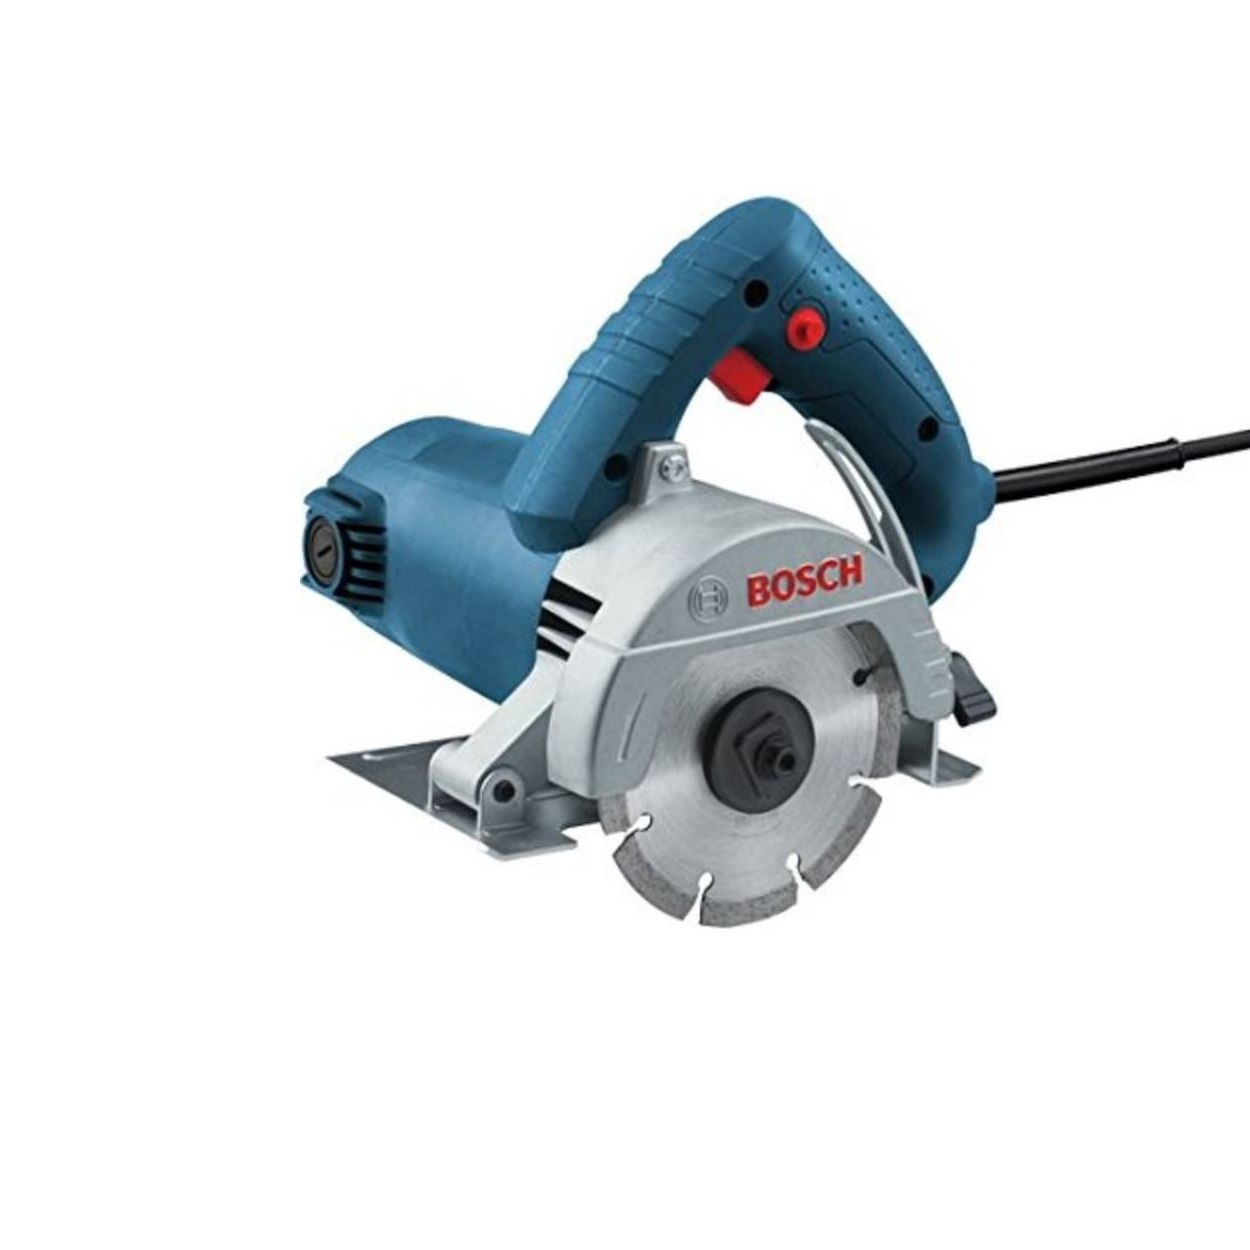 Buy Bosch Professional Marble Cutting Machine GDC 120 Online